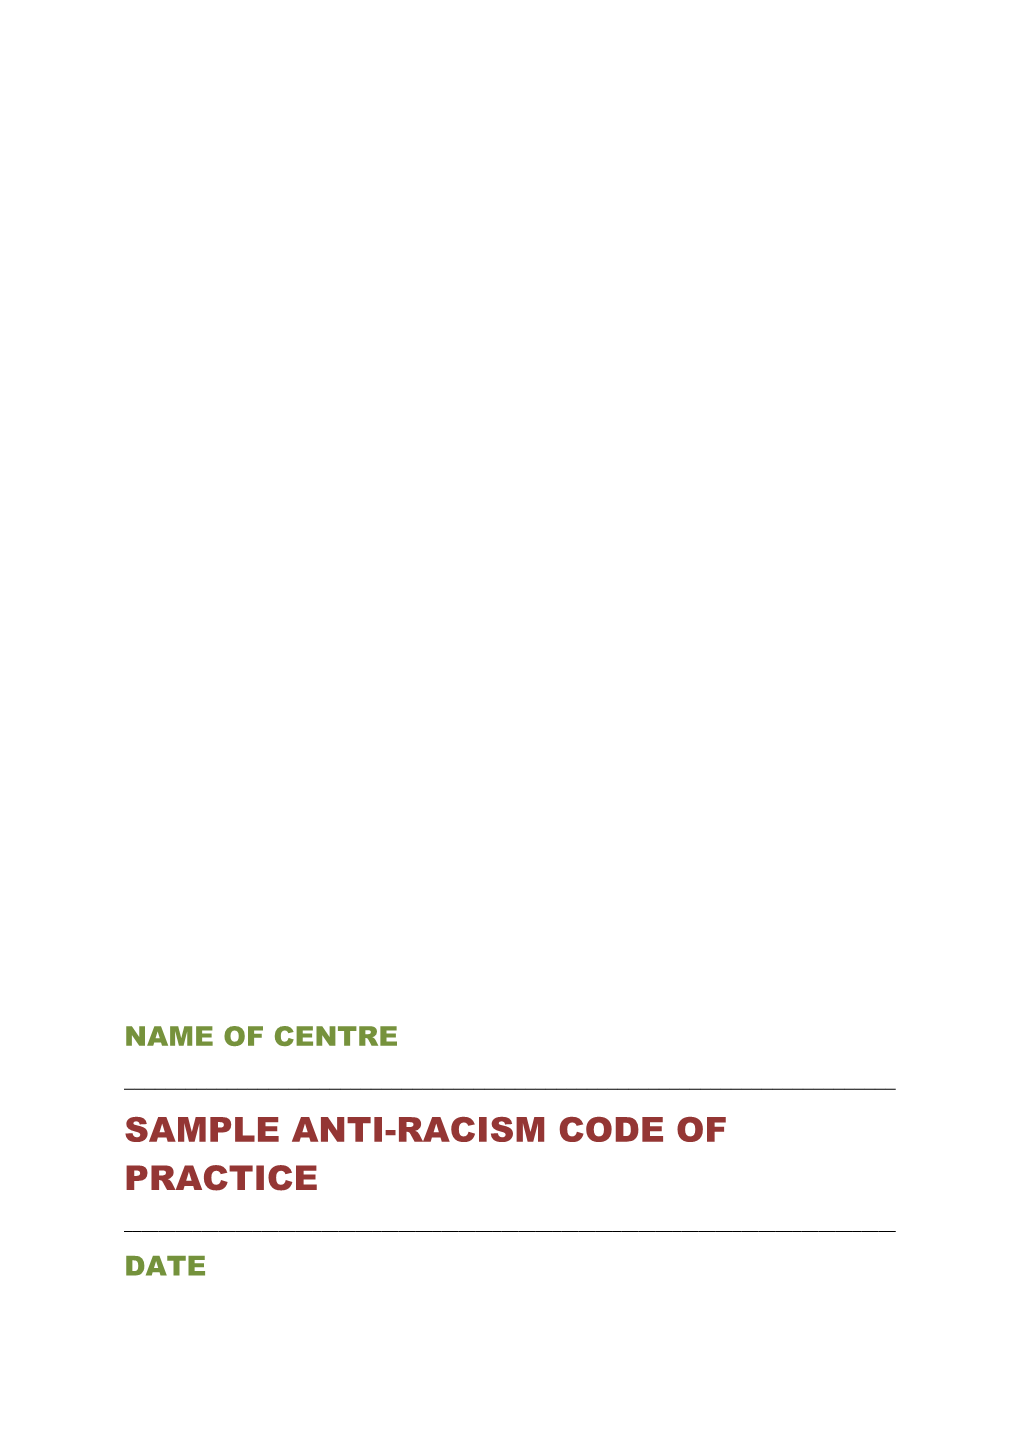 Sample Anti-Racism Code of Practice